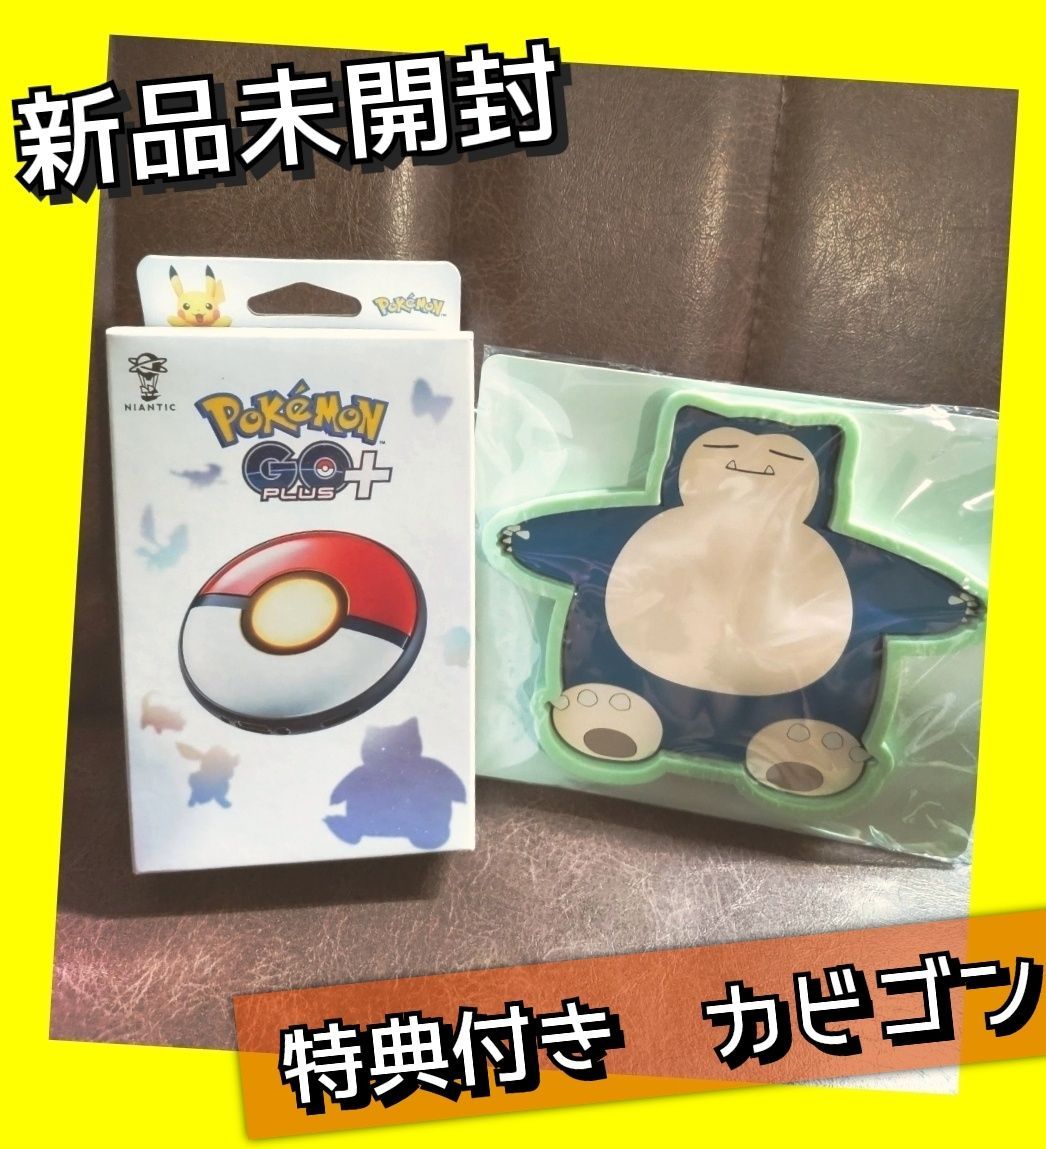 pokemon GO Plus + 特典カビゴンラバートレー付き - メルカリ